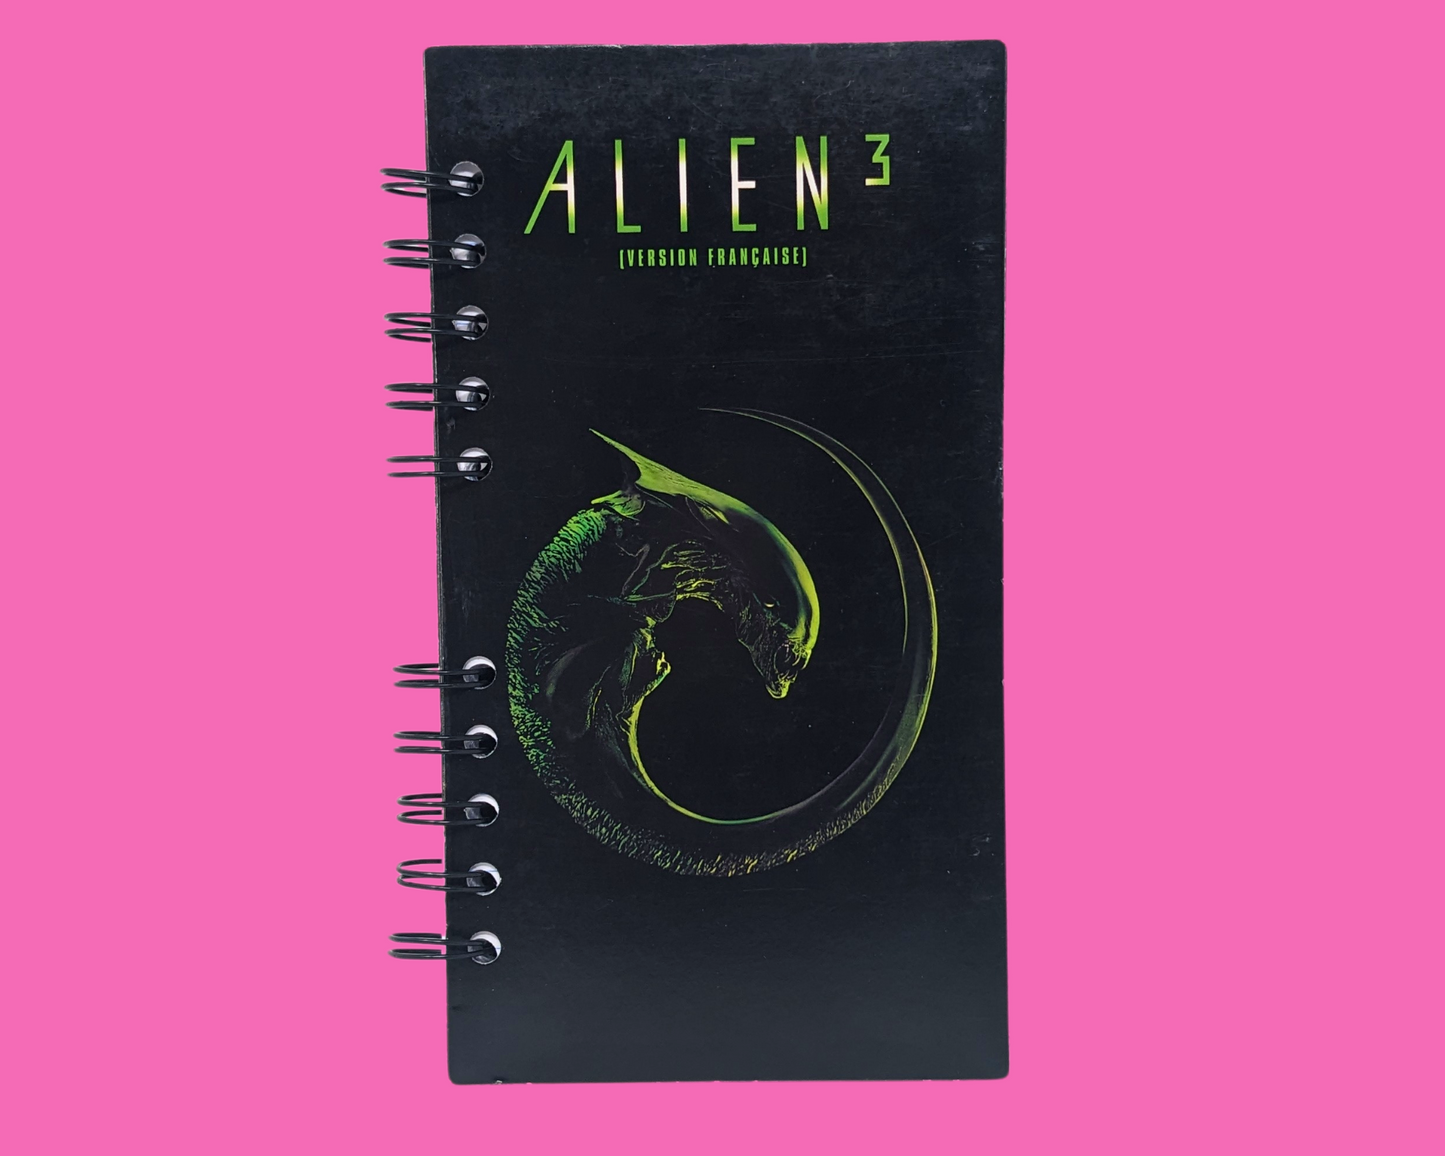 Alien 3 French Version VHS Movie Notebook